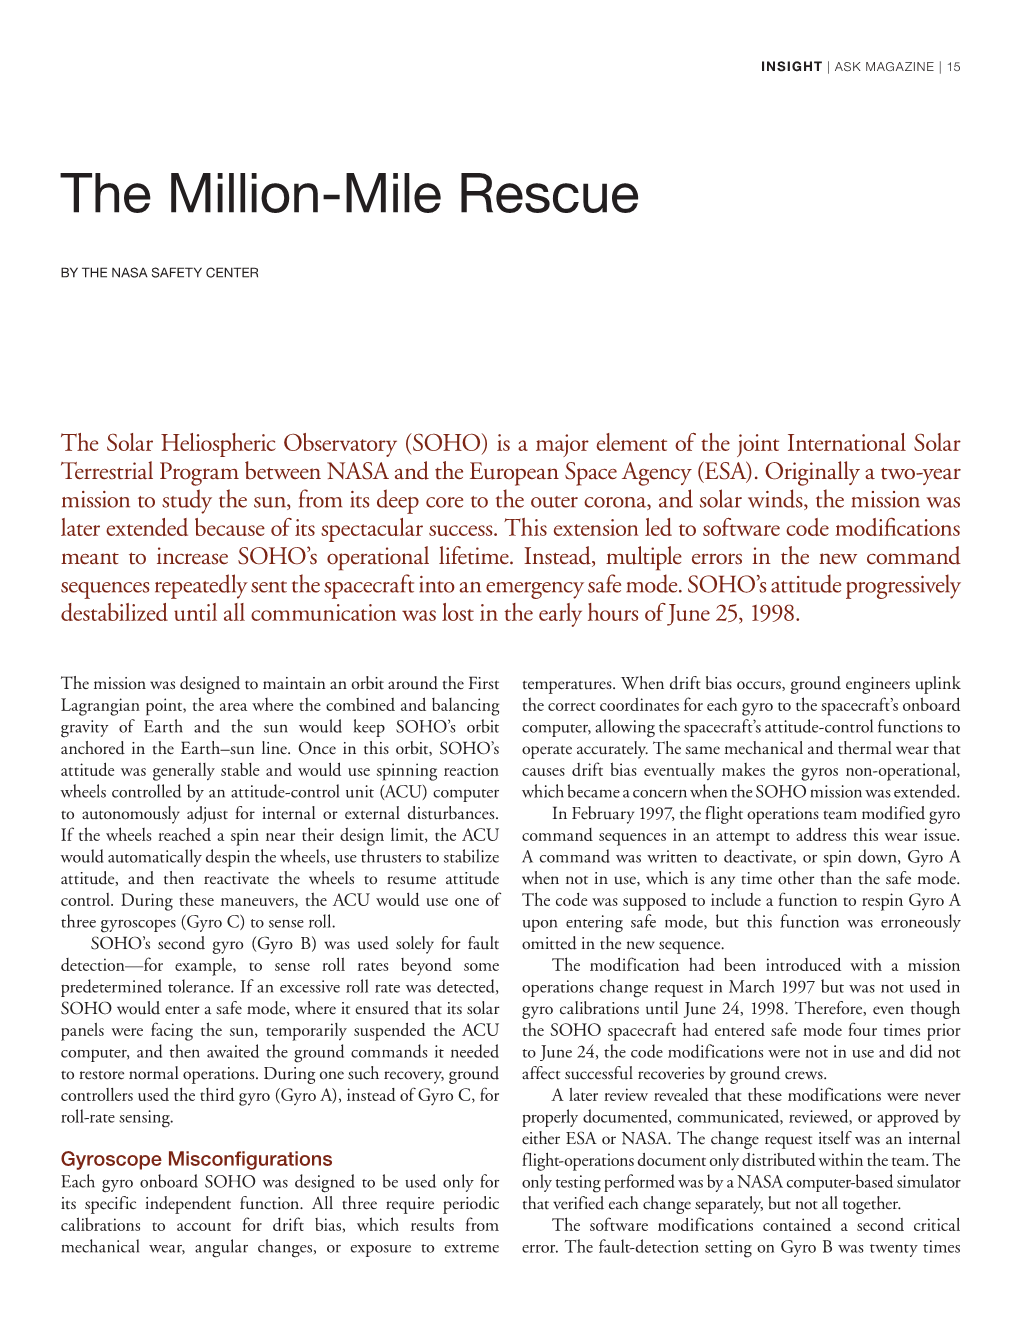 The Million-Mile Rescue